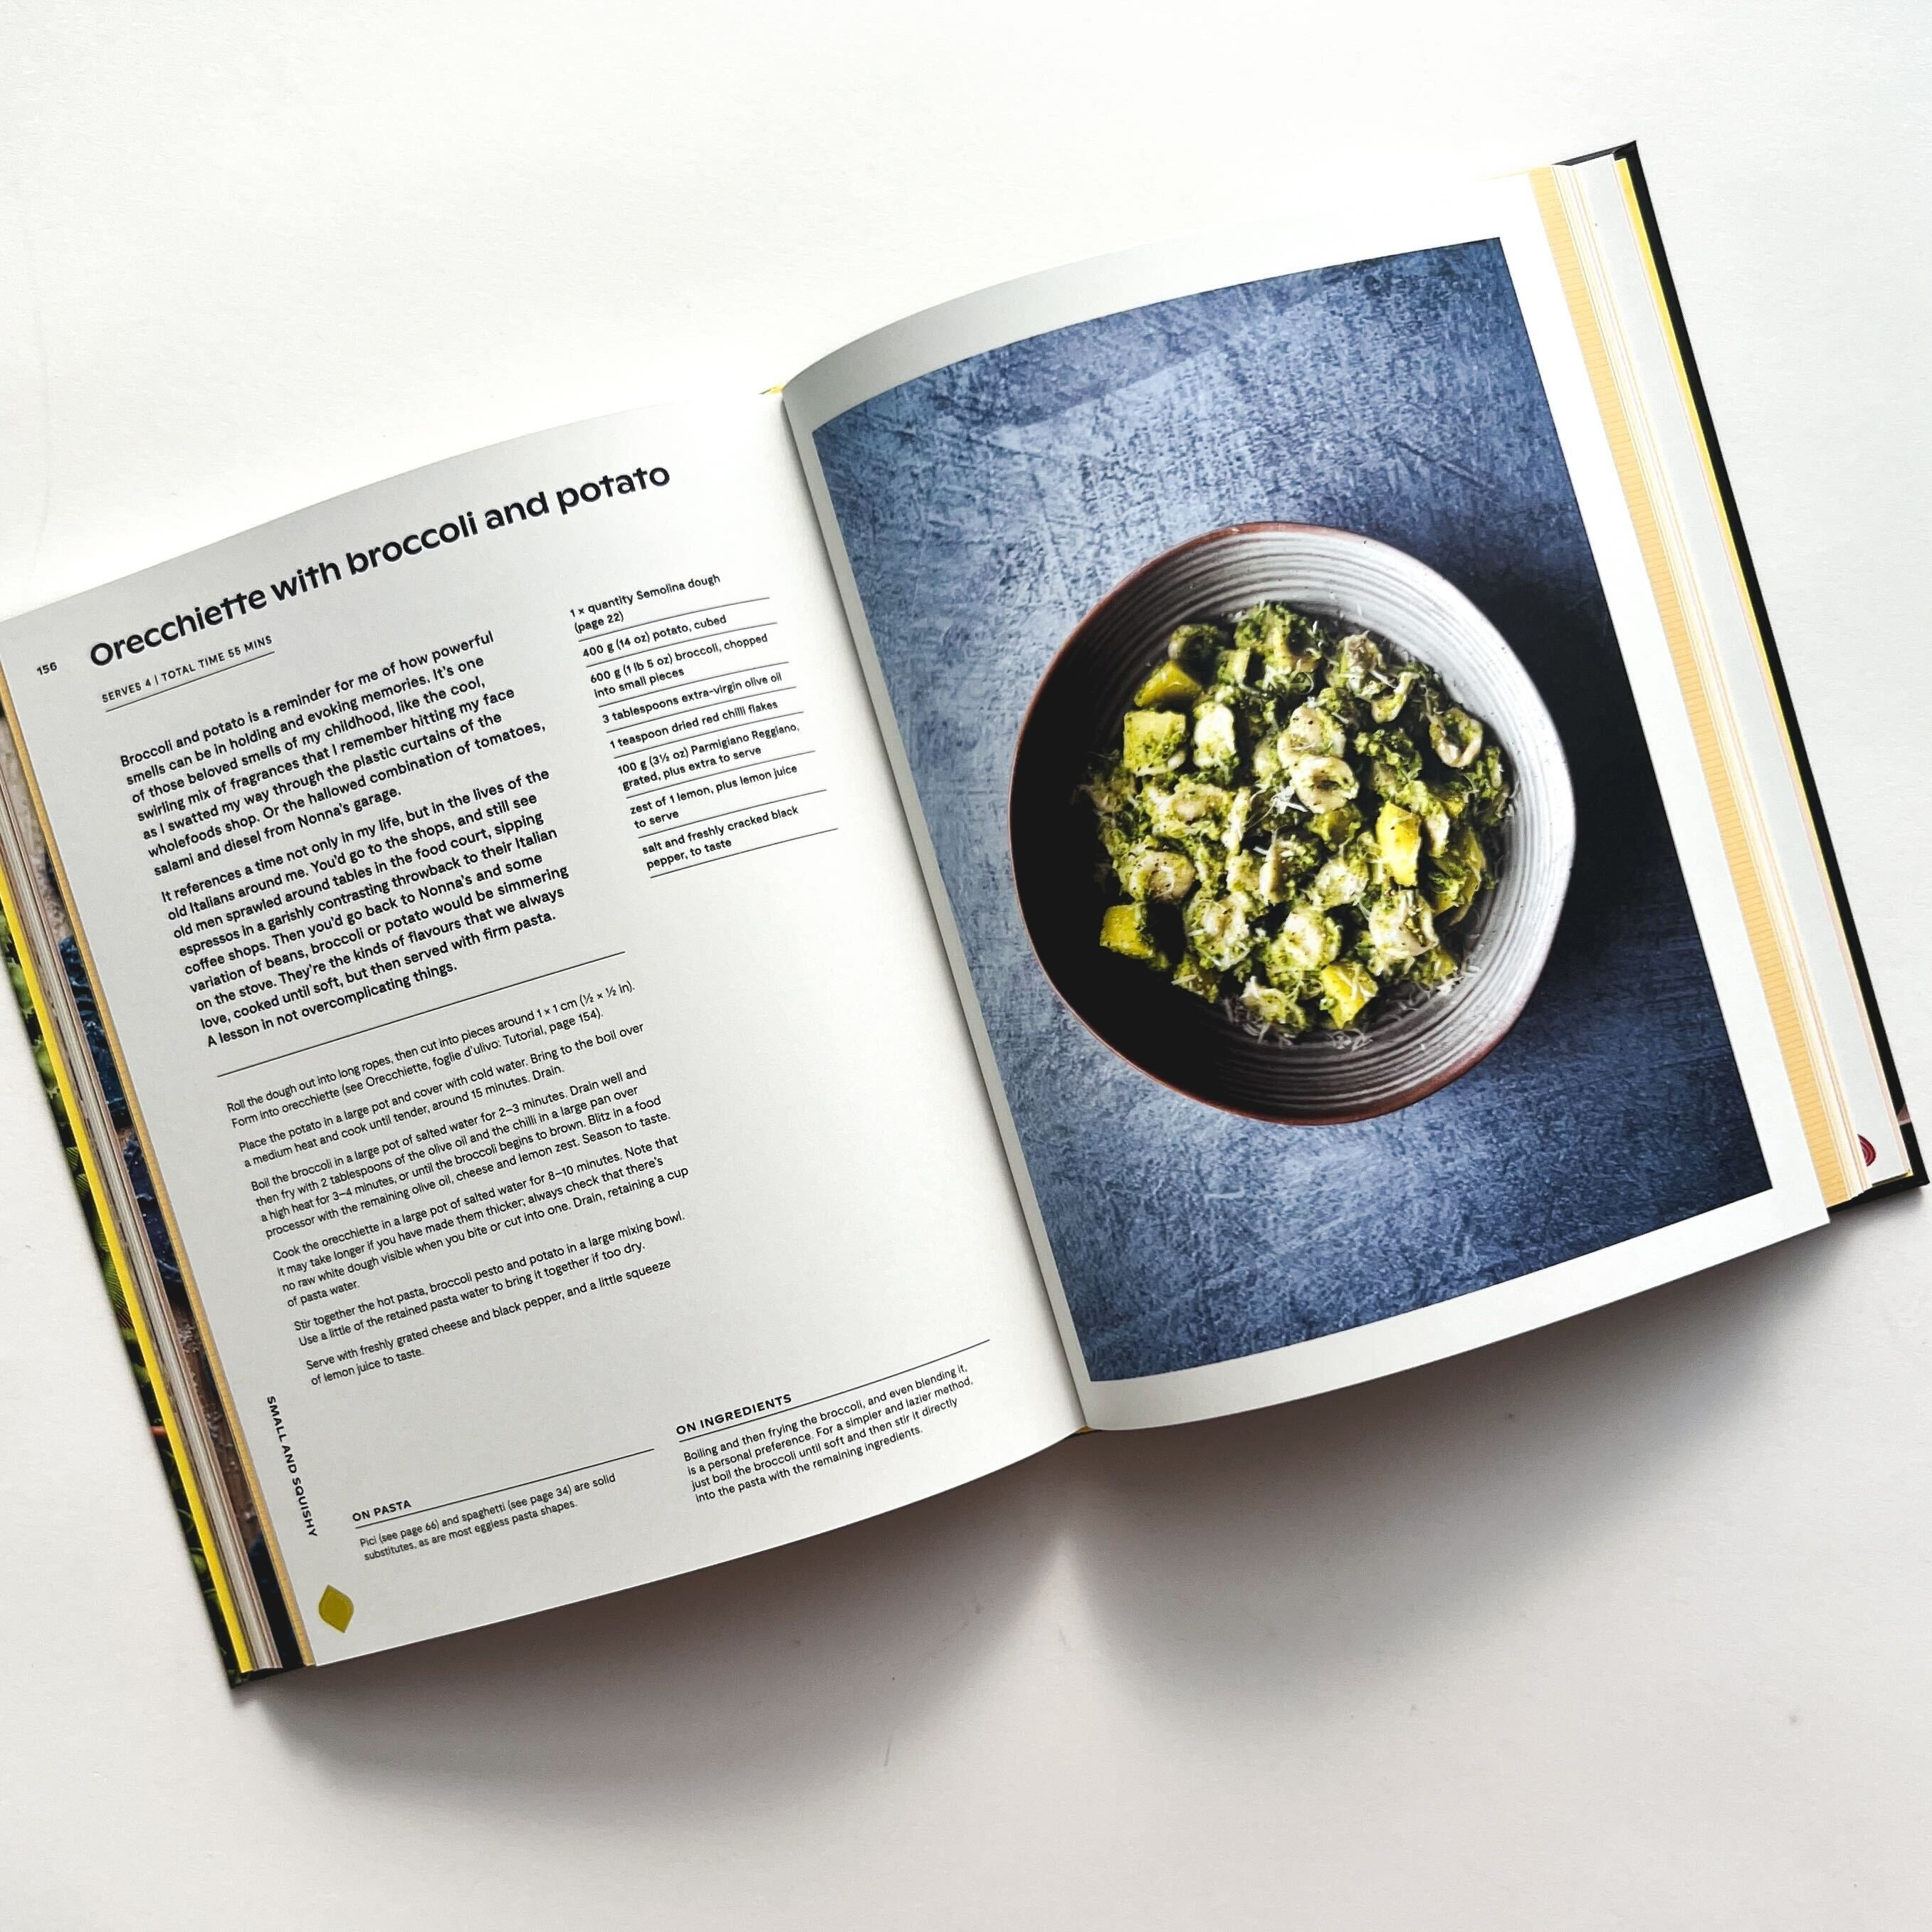 Inside Pasta et Al book, orchiette recipe